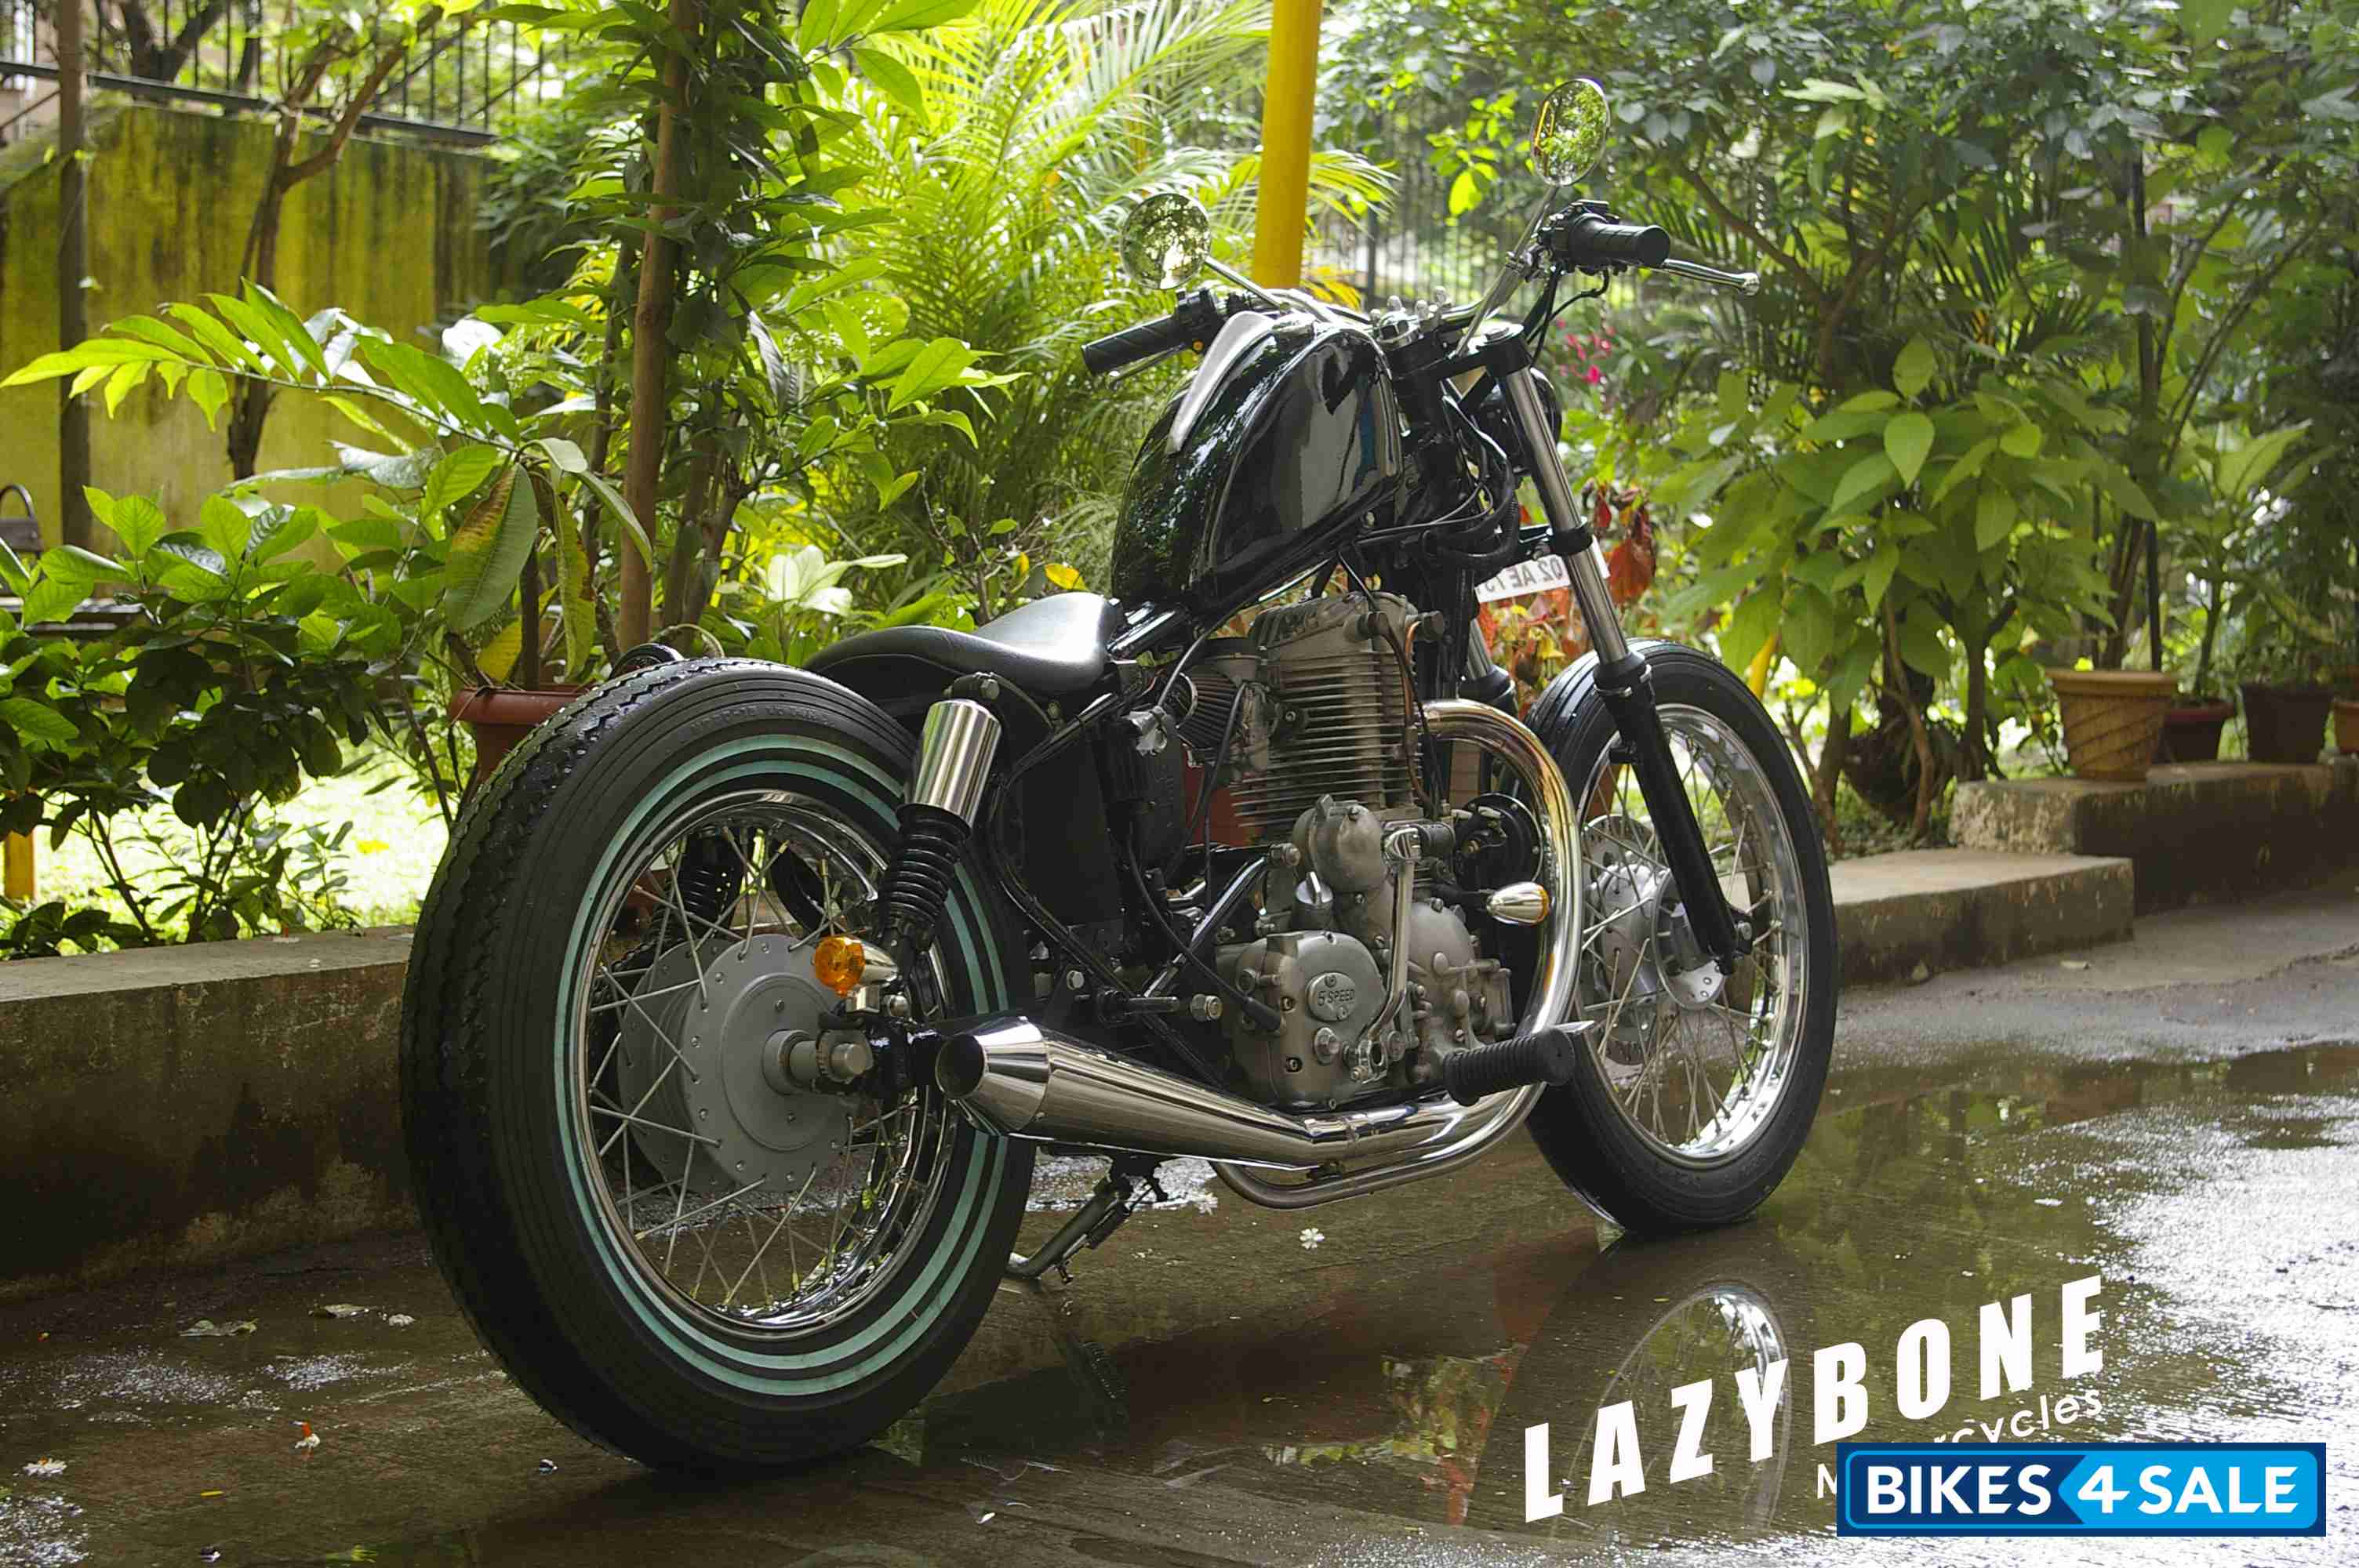 Lazybone Motorcycles